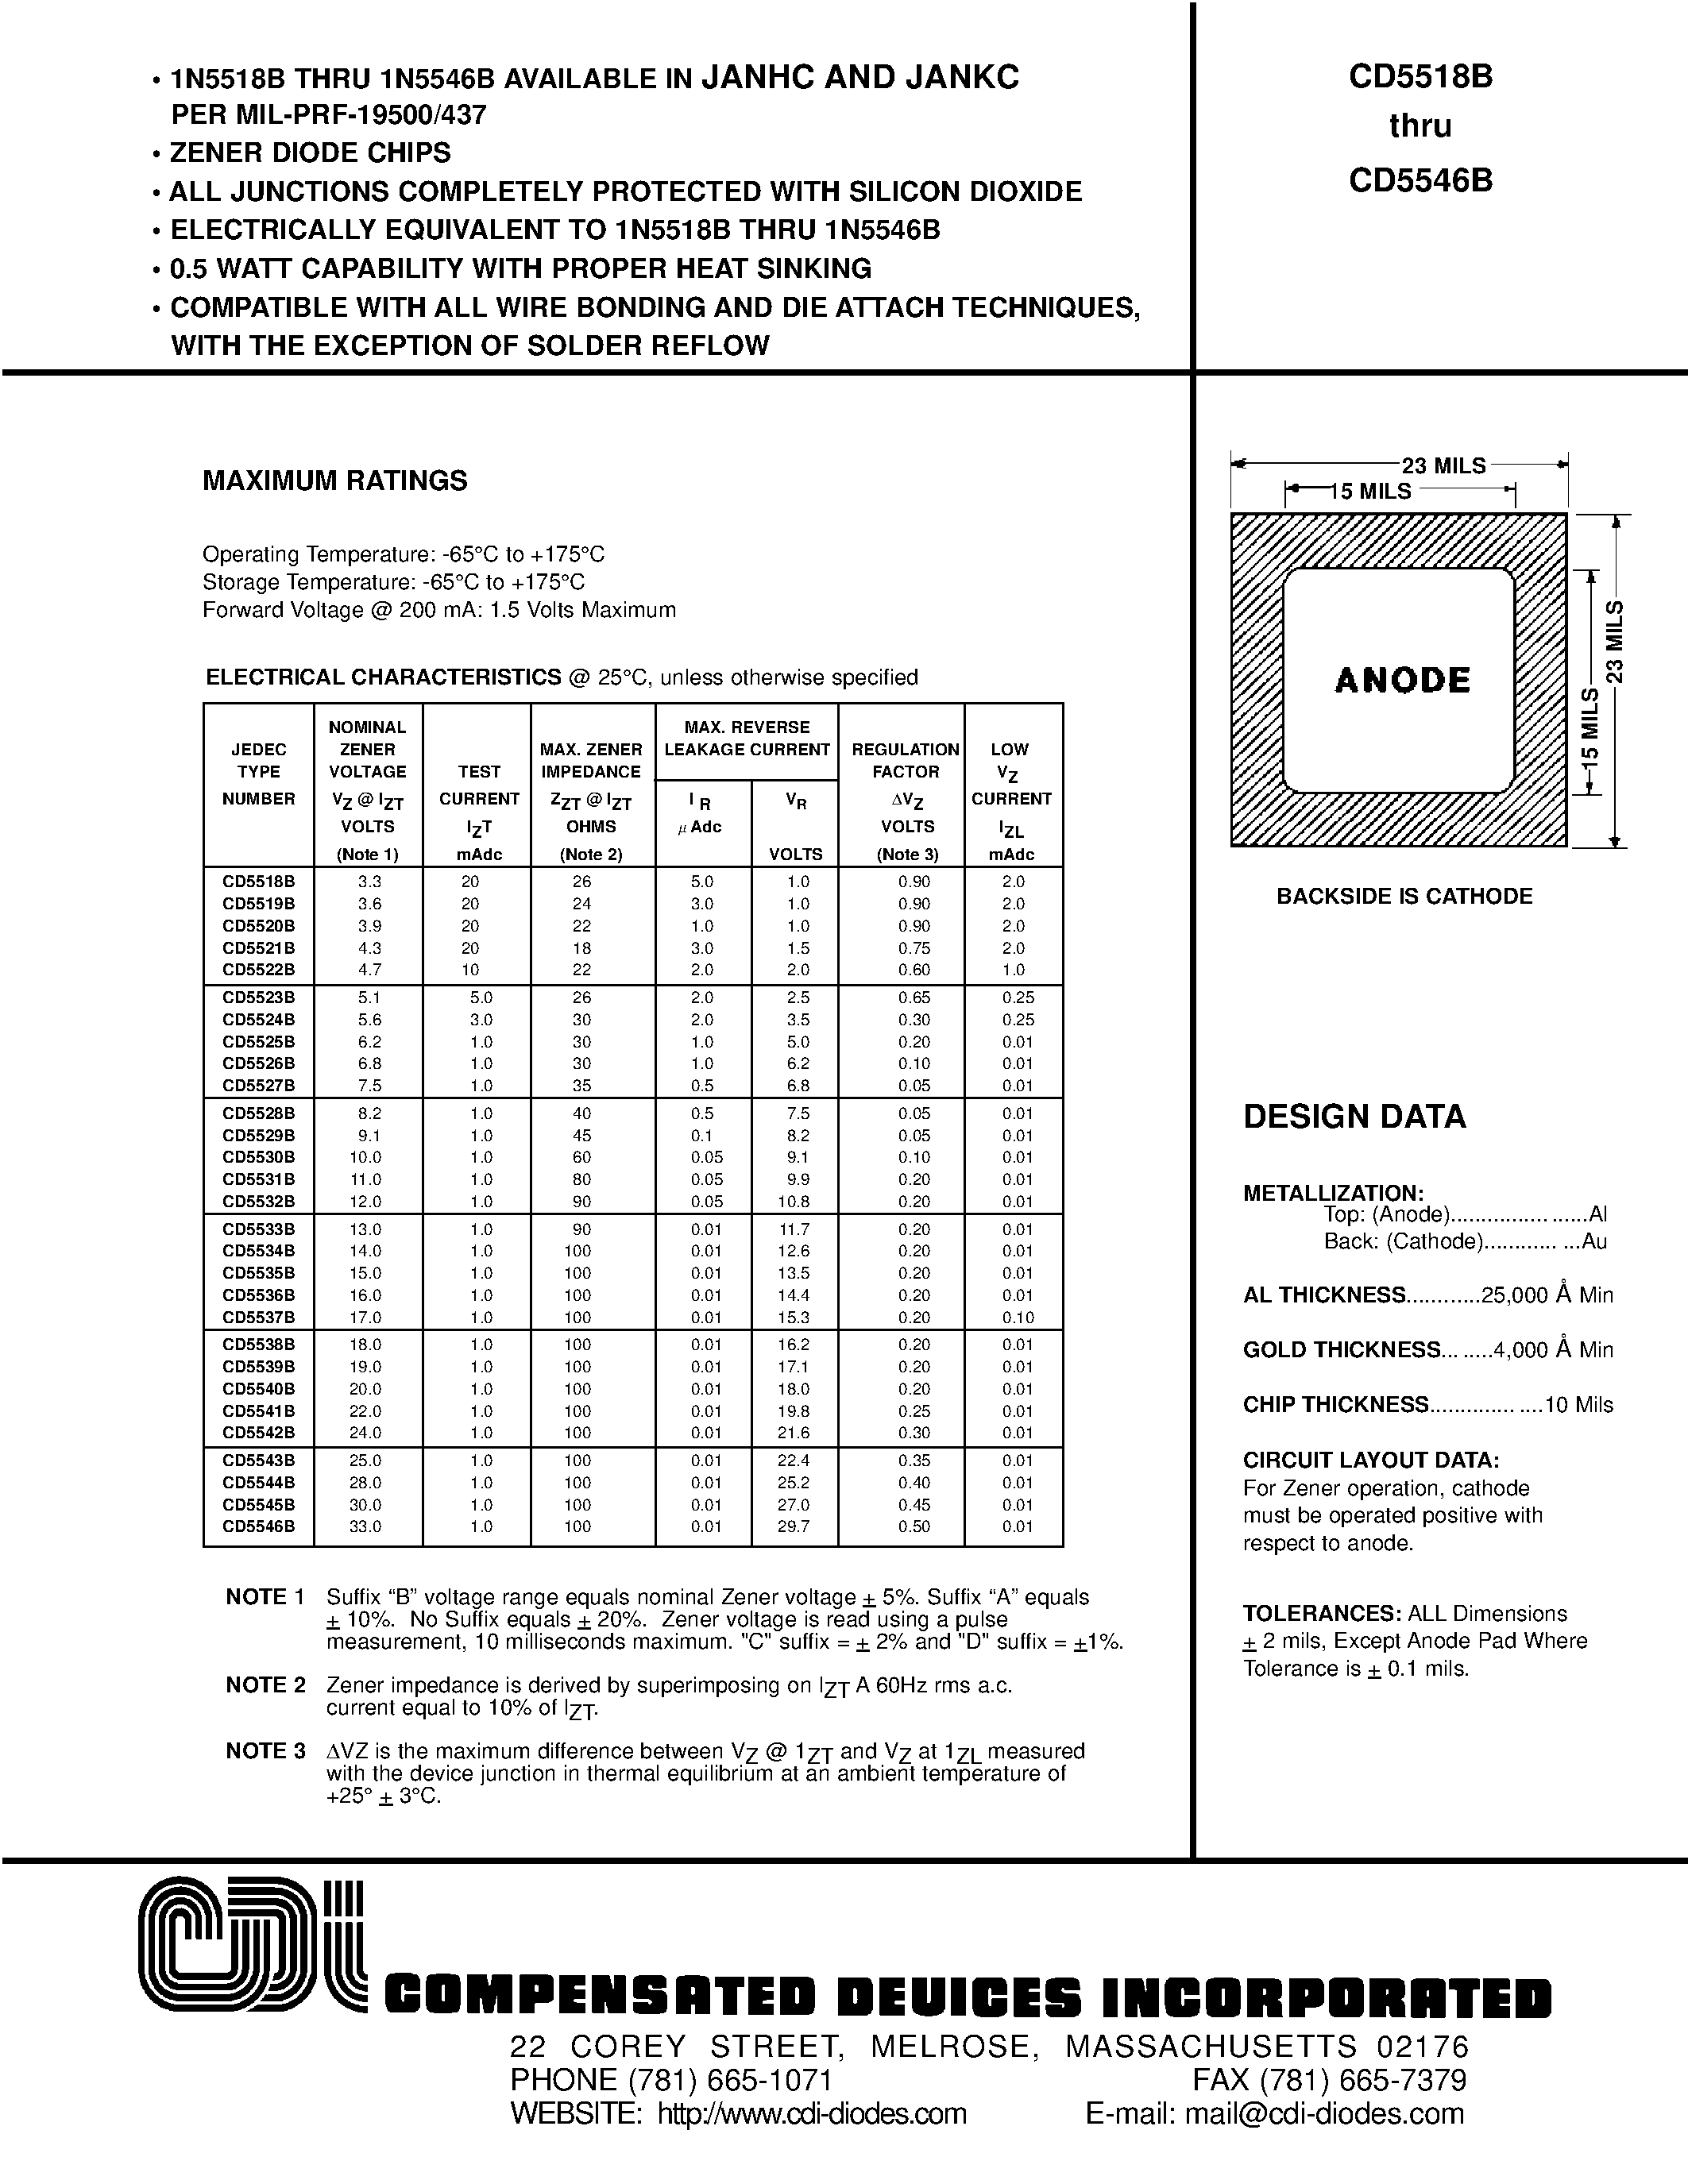 Datasheet CD5533B - ZENER DIODE CHIPS page 1